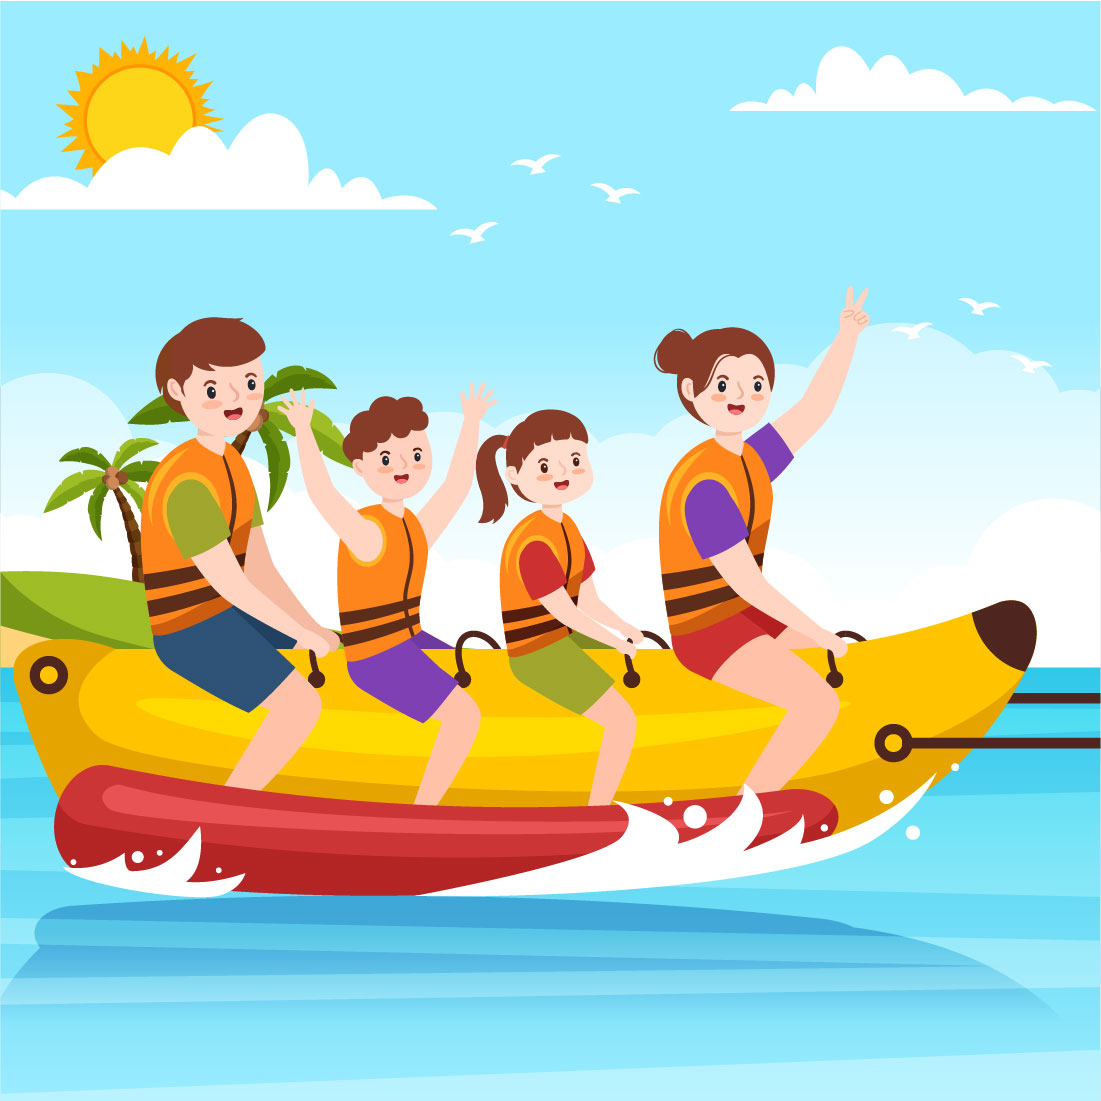 12 Playing Banana Boat and Jet Ski Illustration preview image.